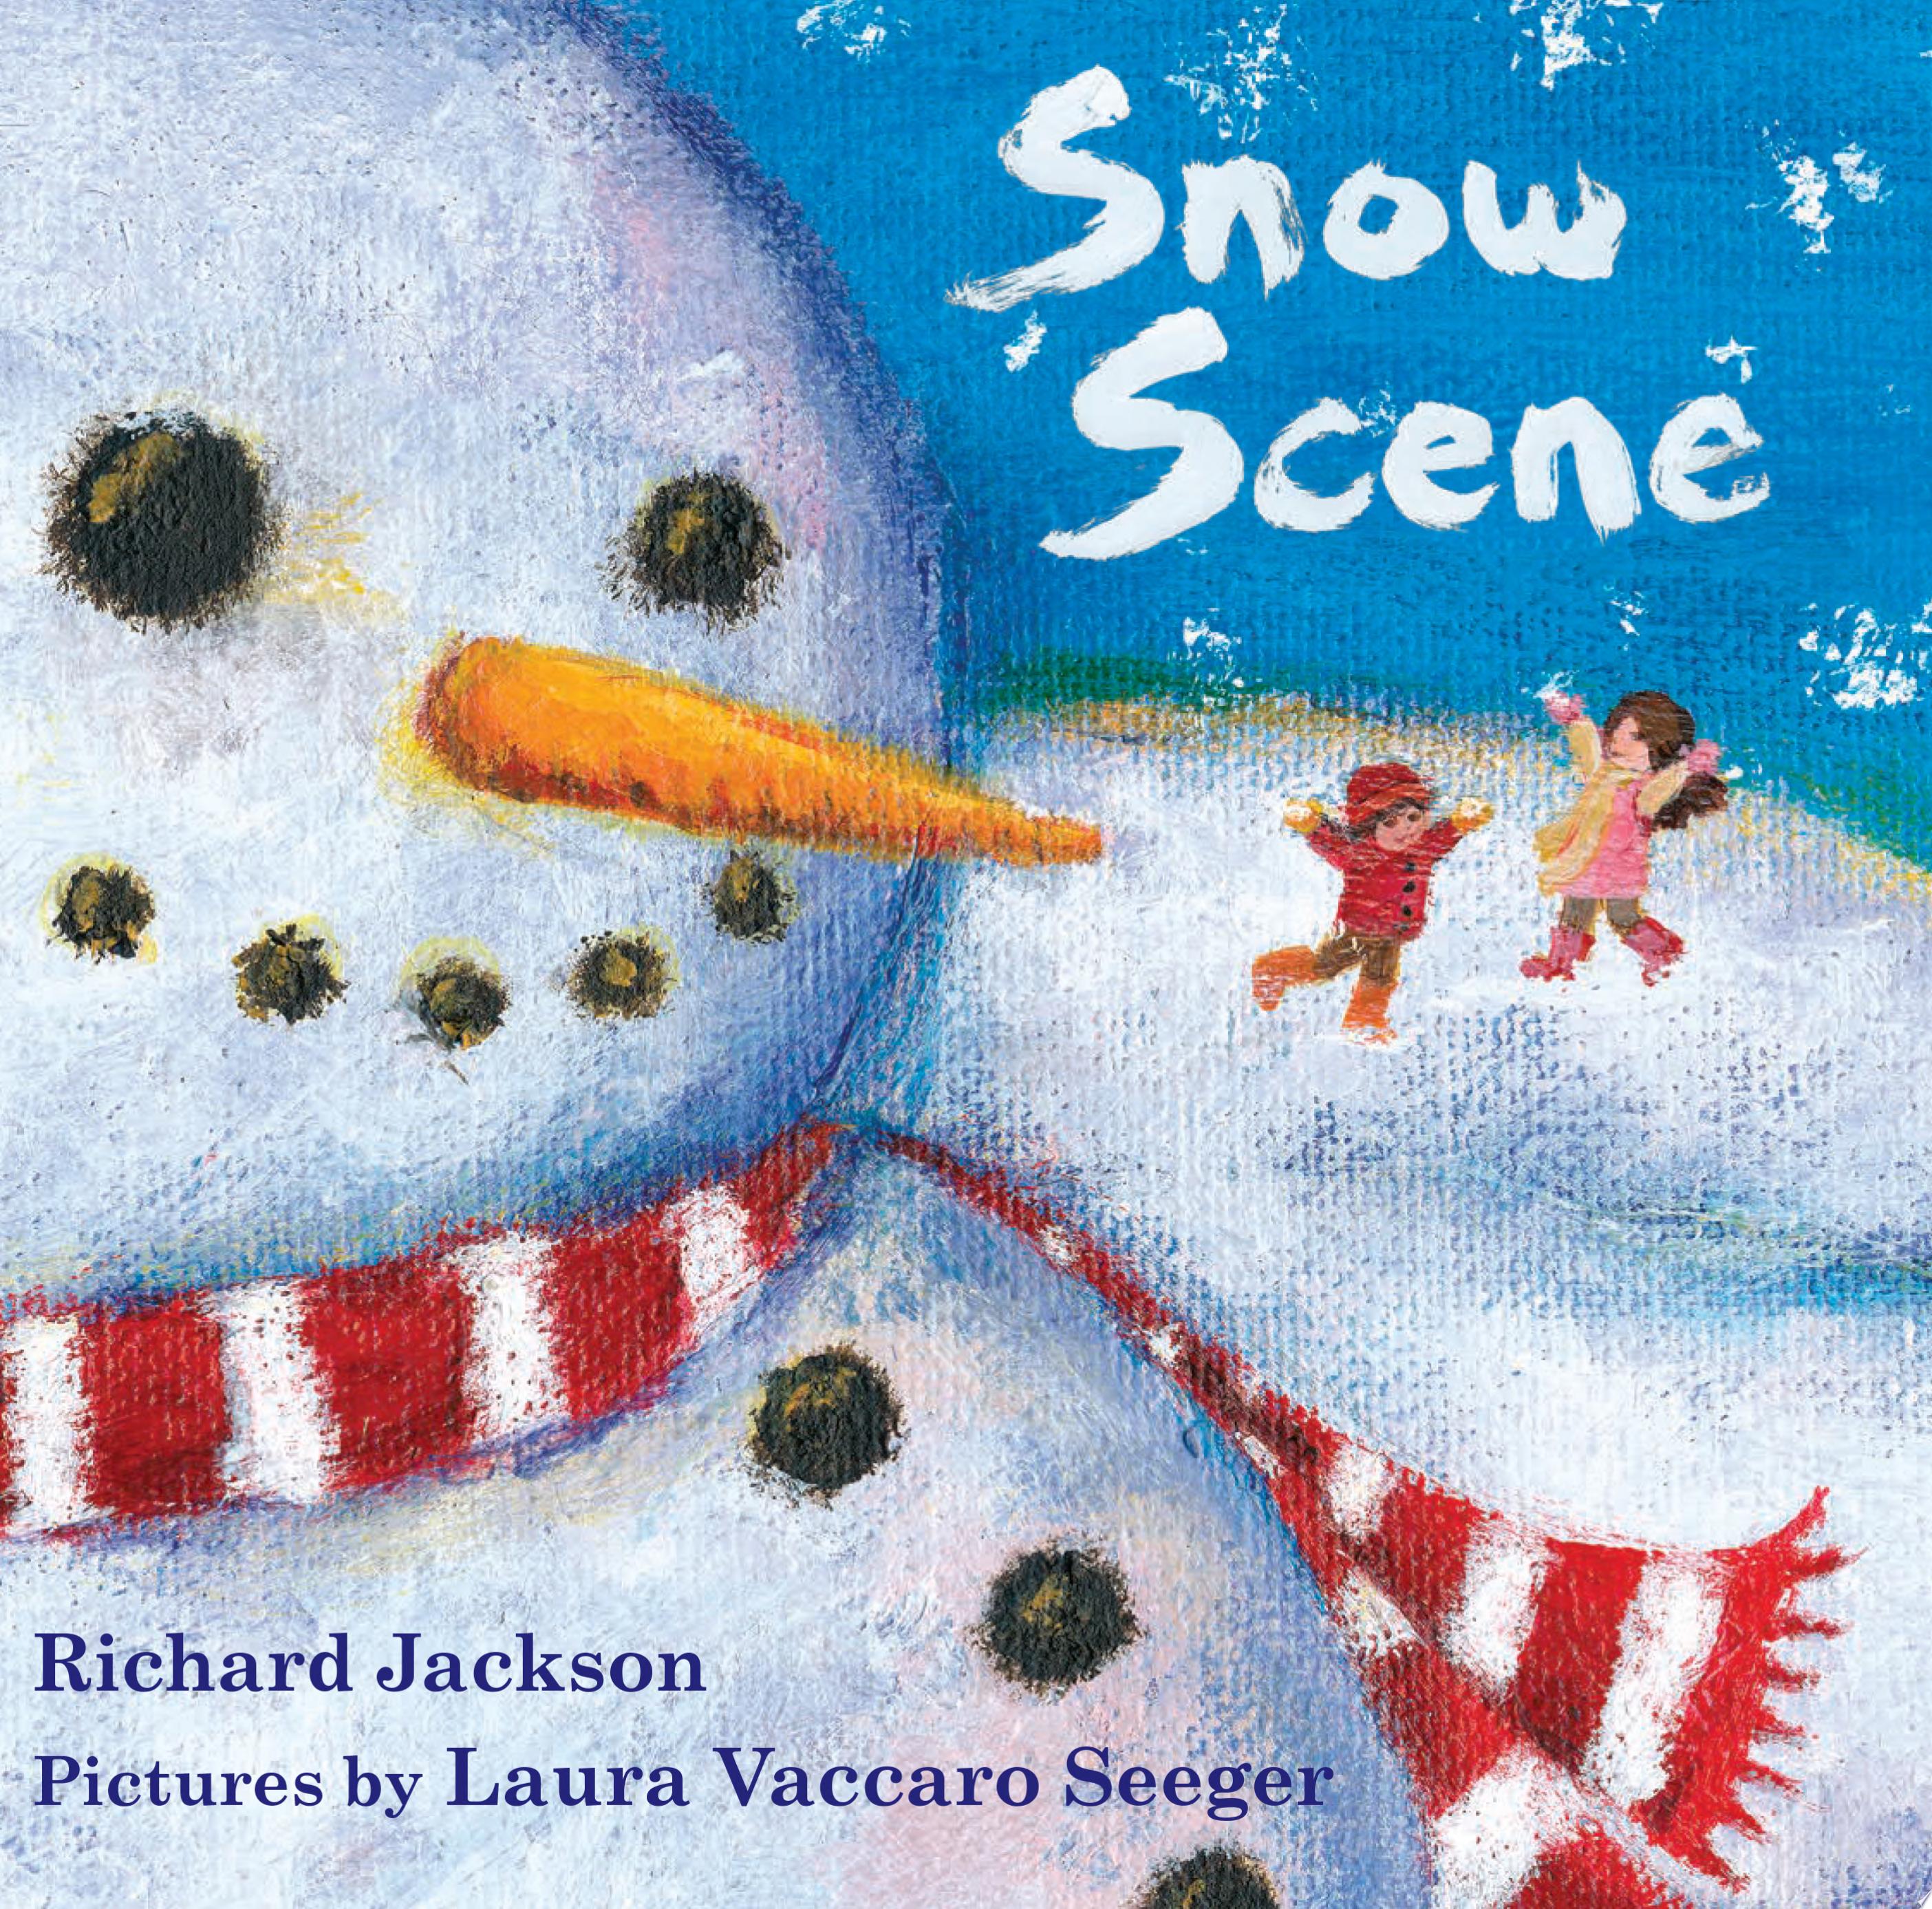 Image for "Snow Scene"